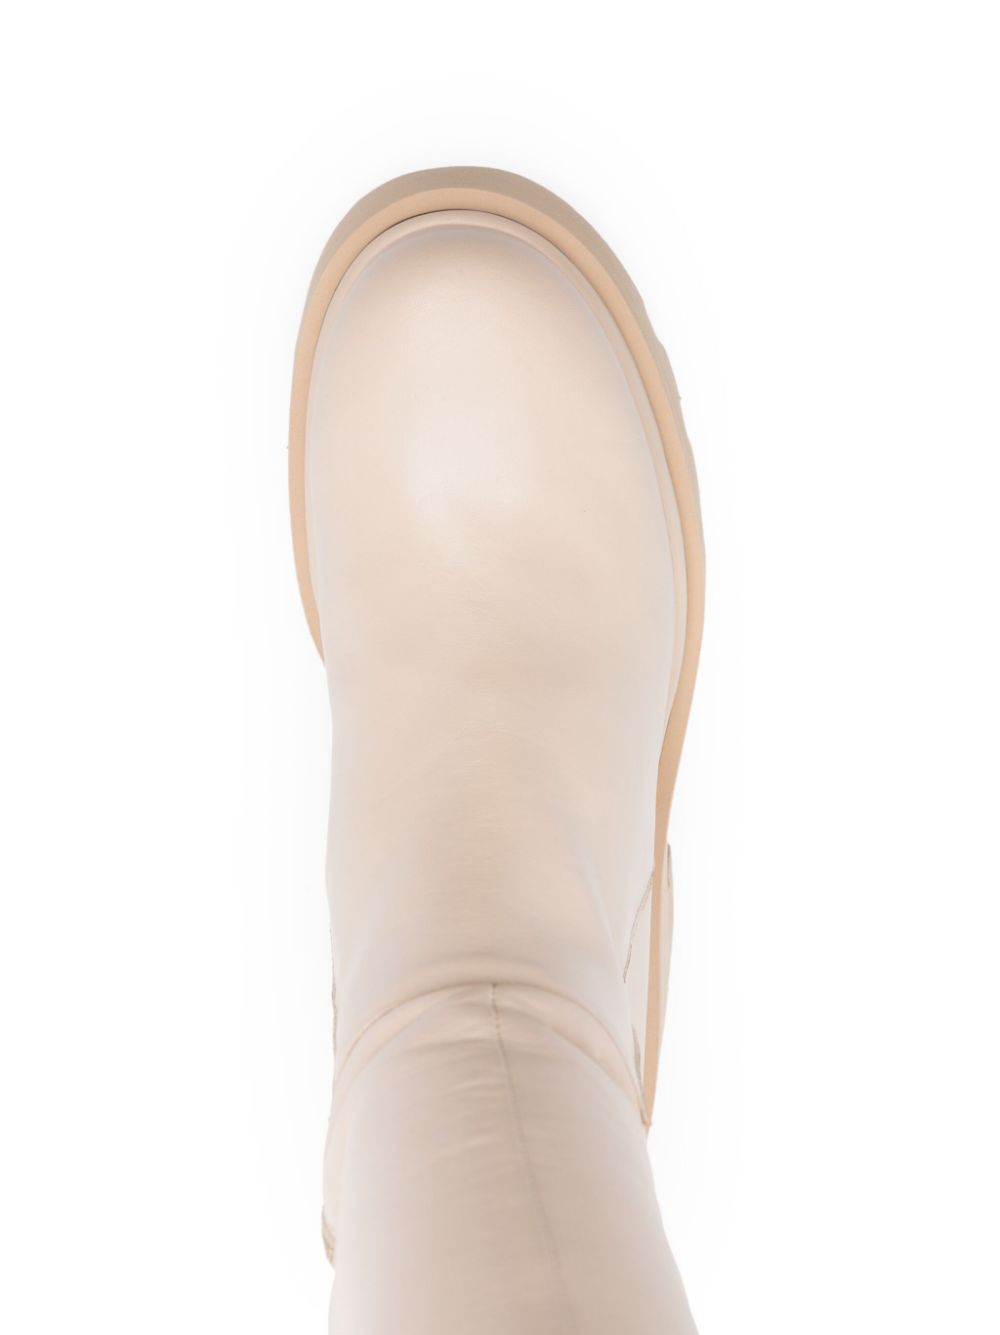 Paloma barcelo' PALOMA BARCELO'- Leather Heel Boots